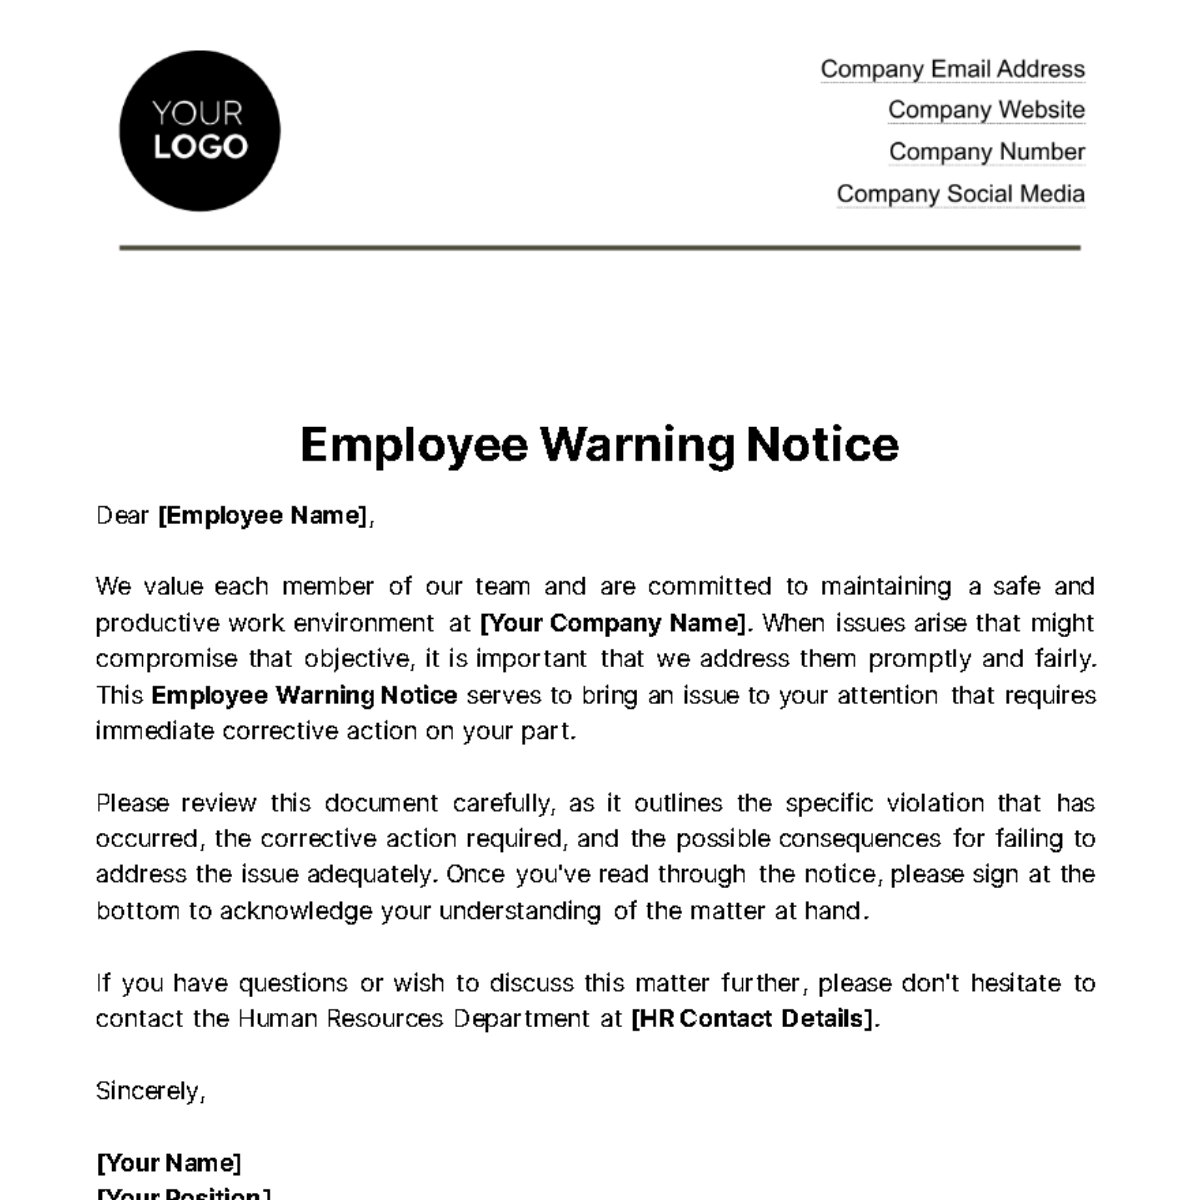 Employee Warning Notice HR Template